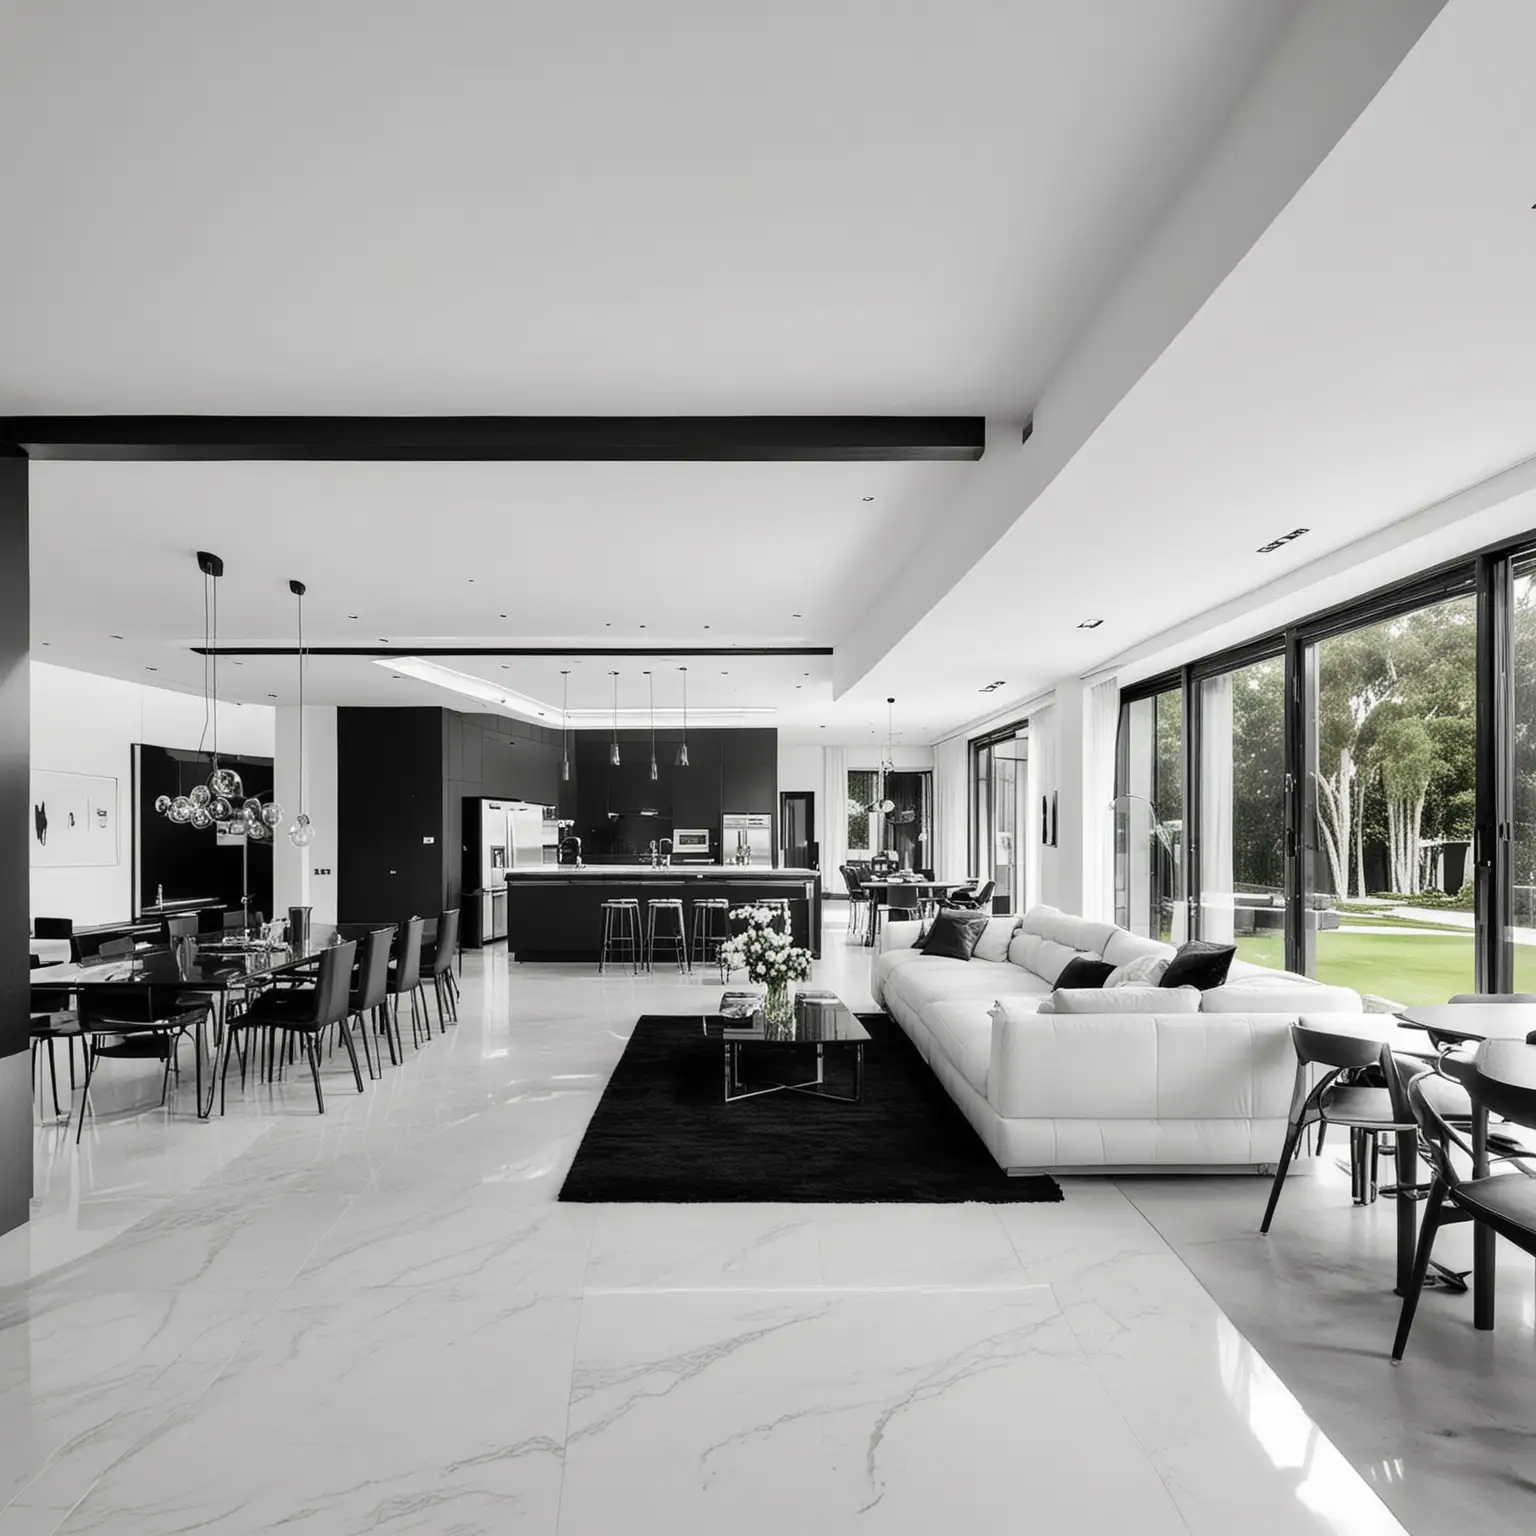 Contemporary Black and White Home Interior with Minimalist Decor